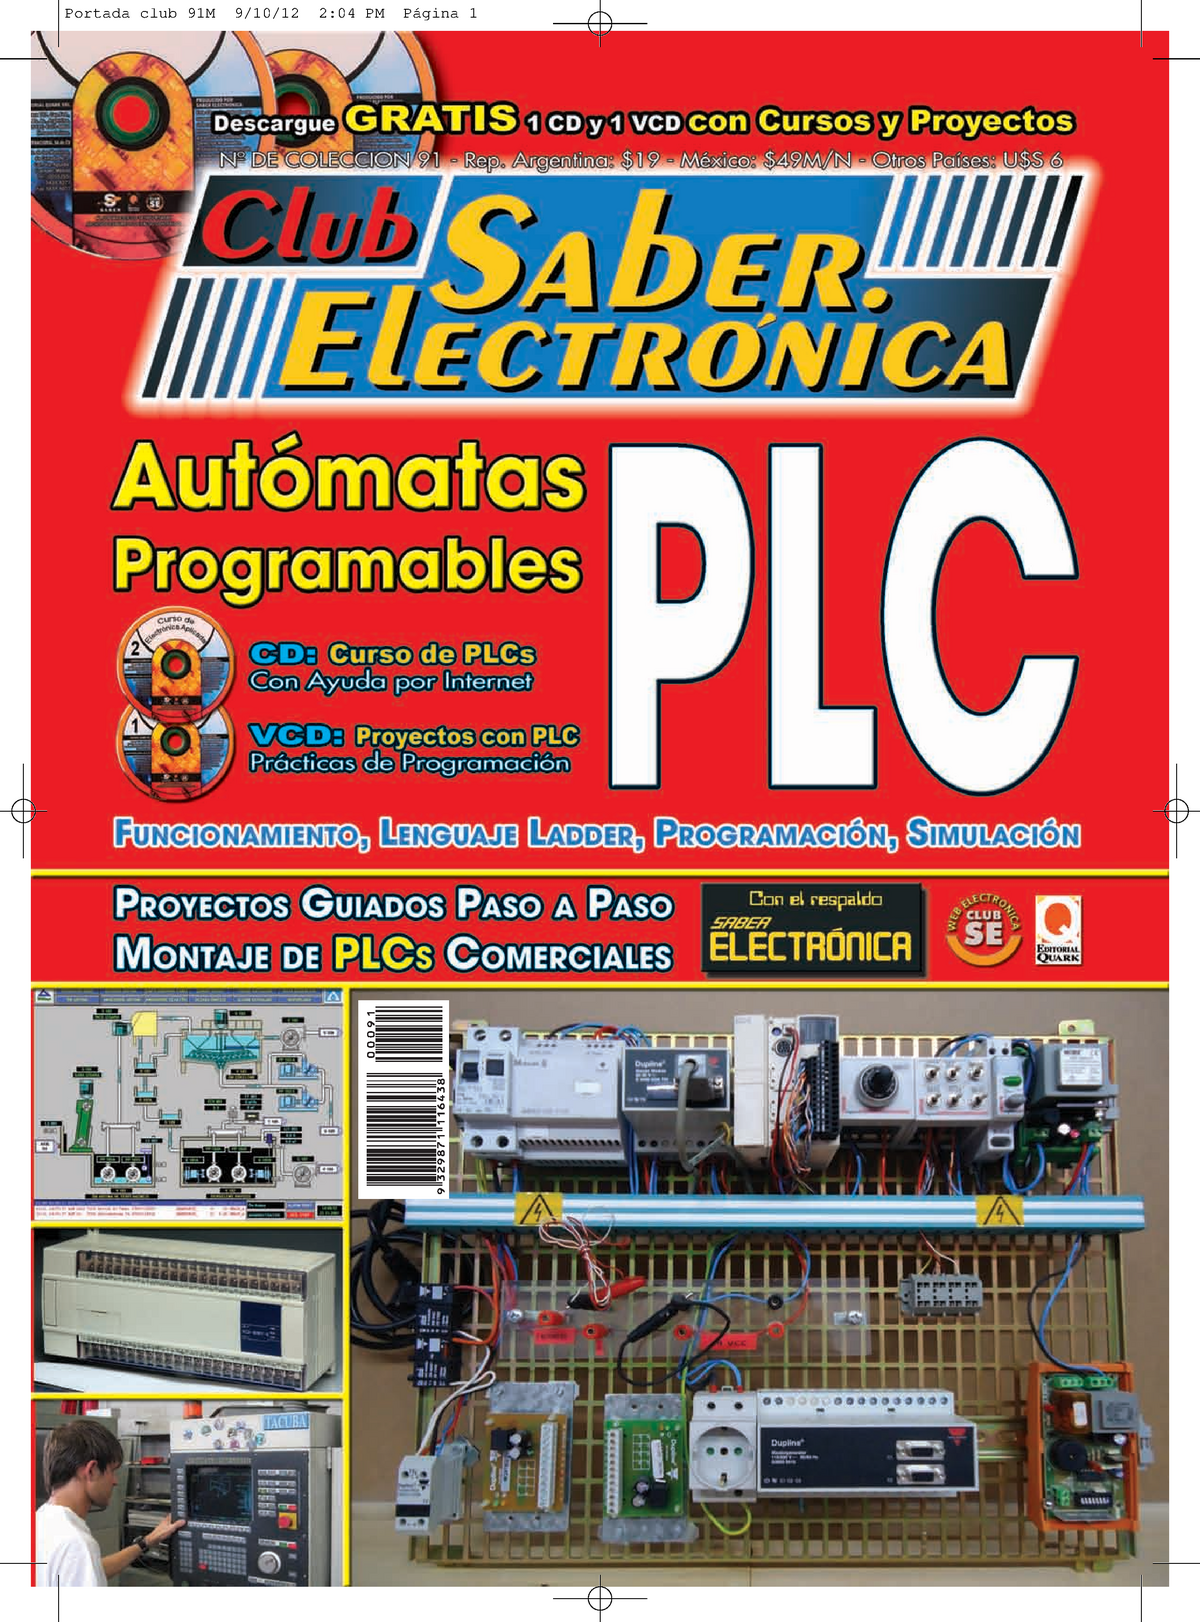 Club Saber Electronica - Autómatas programables PLC - 2ª de forros 9/10/12  4:30 PM Página 2ªFo PLC - Studocu